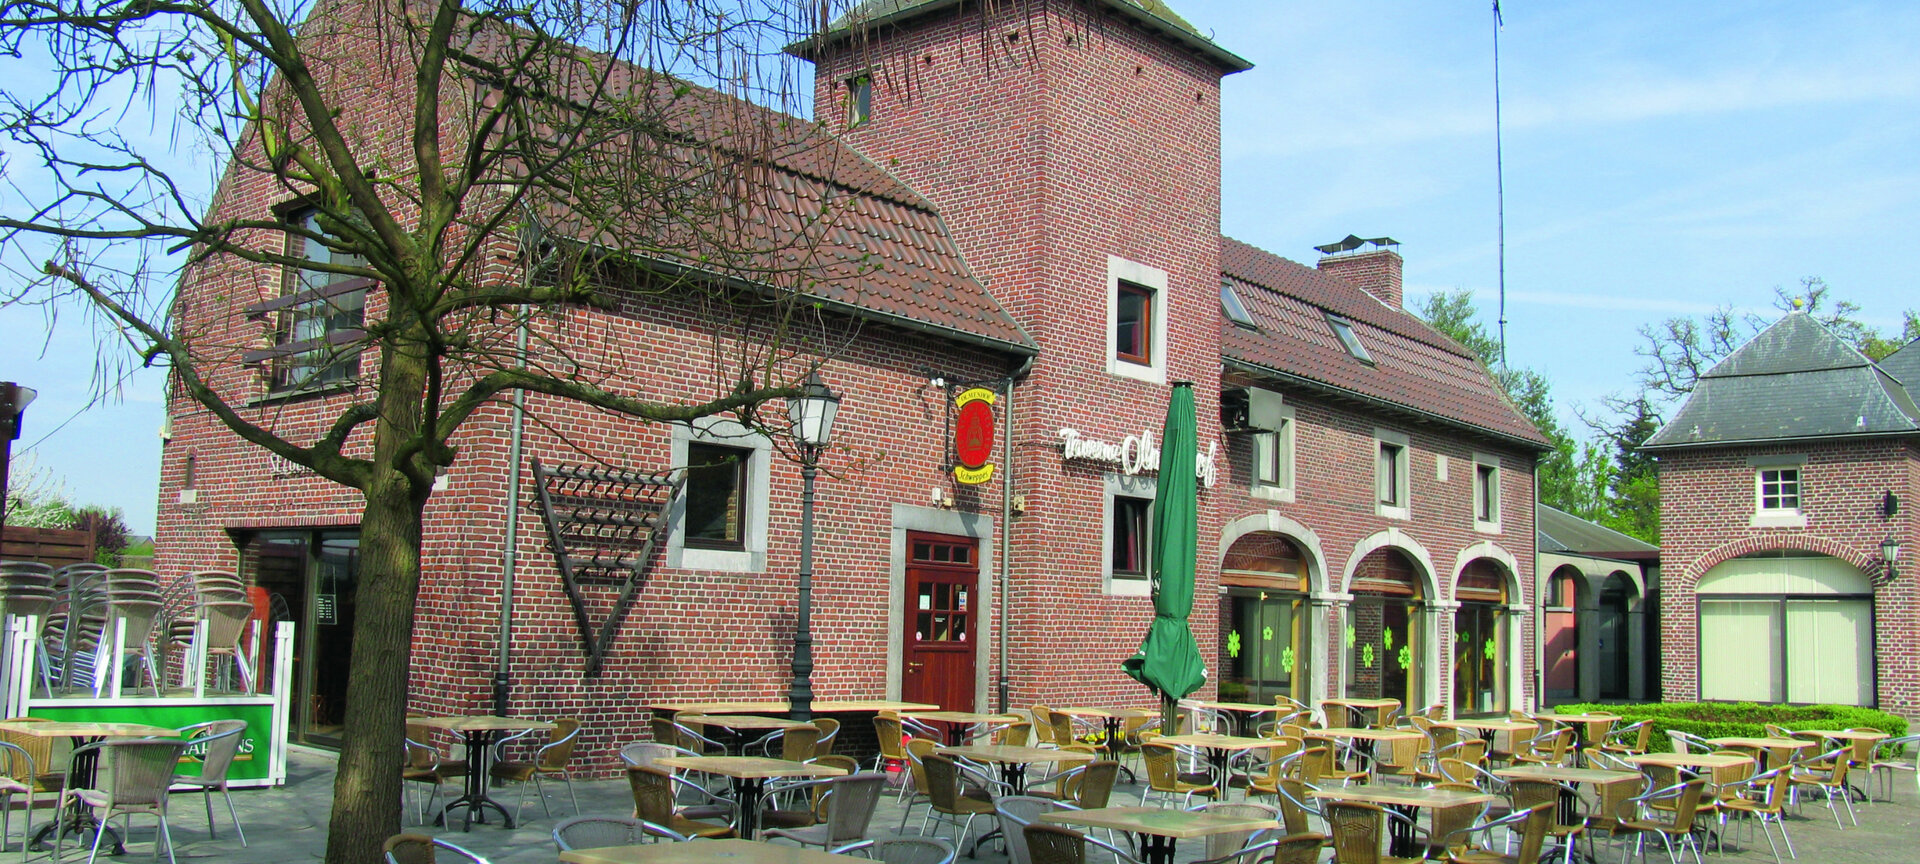 Brasserie Olmenhof - Brasserie Olmenhof